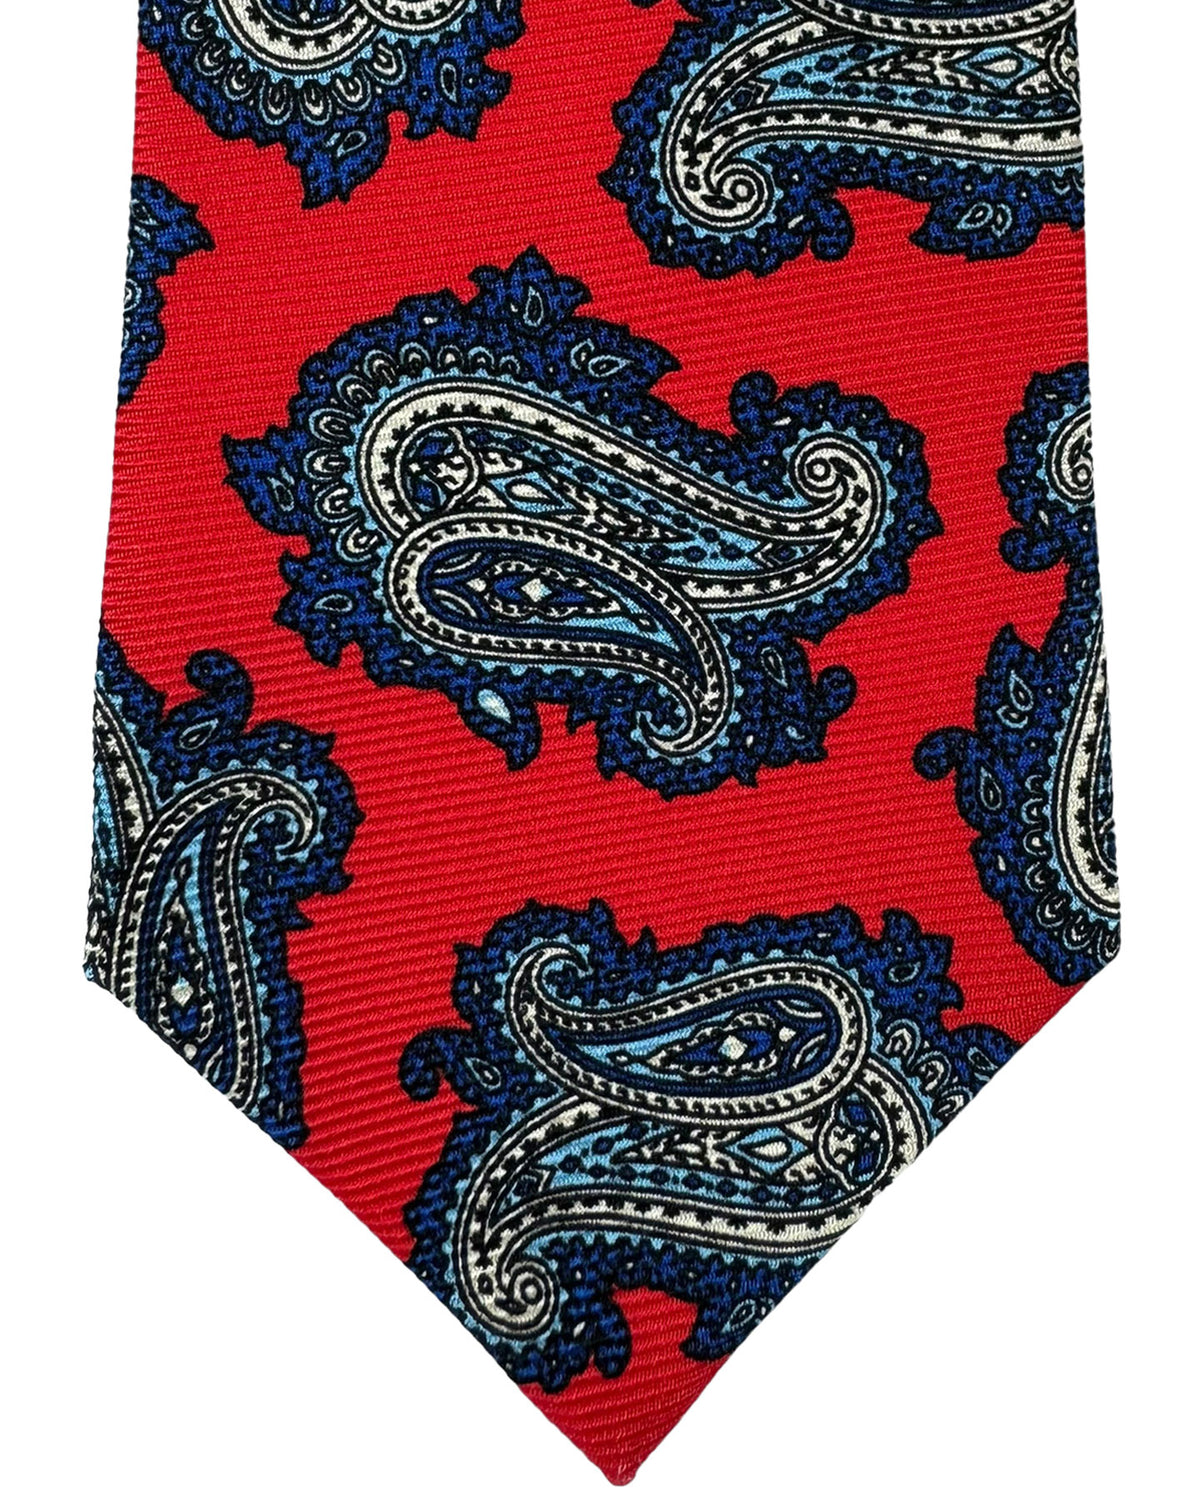 Kiton Tie Yellow Red Navy Paisley - Sevenfold Necktie - Tie Deals